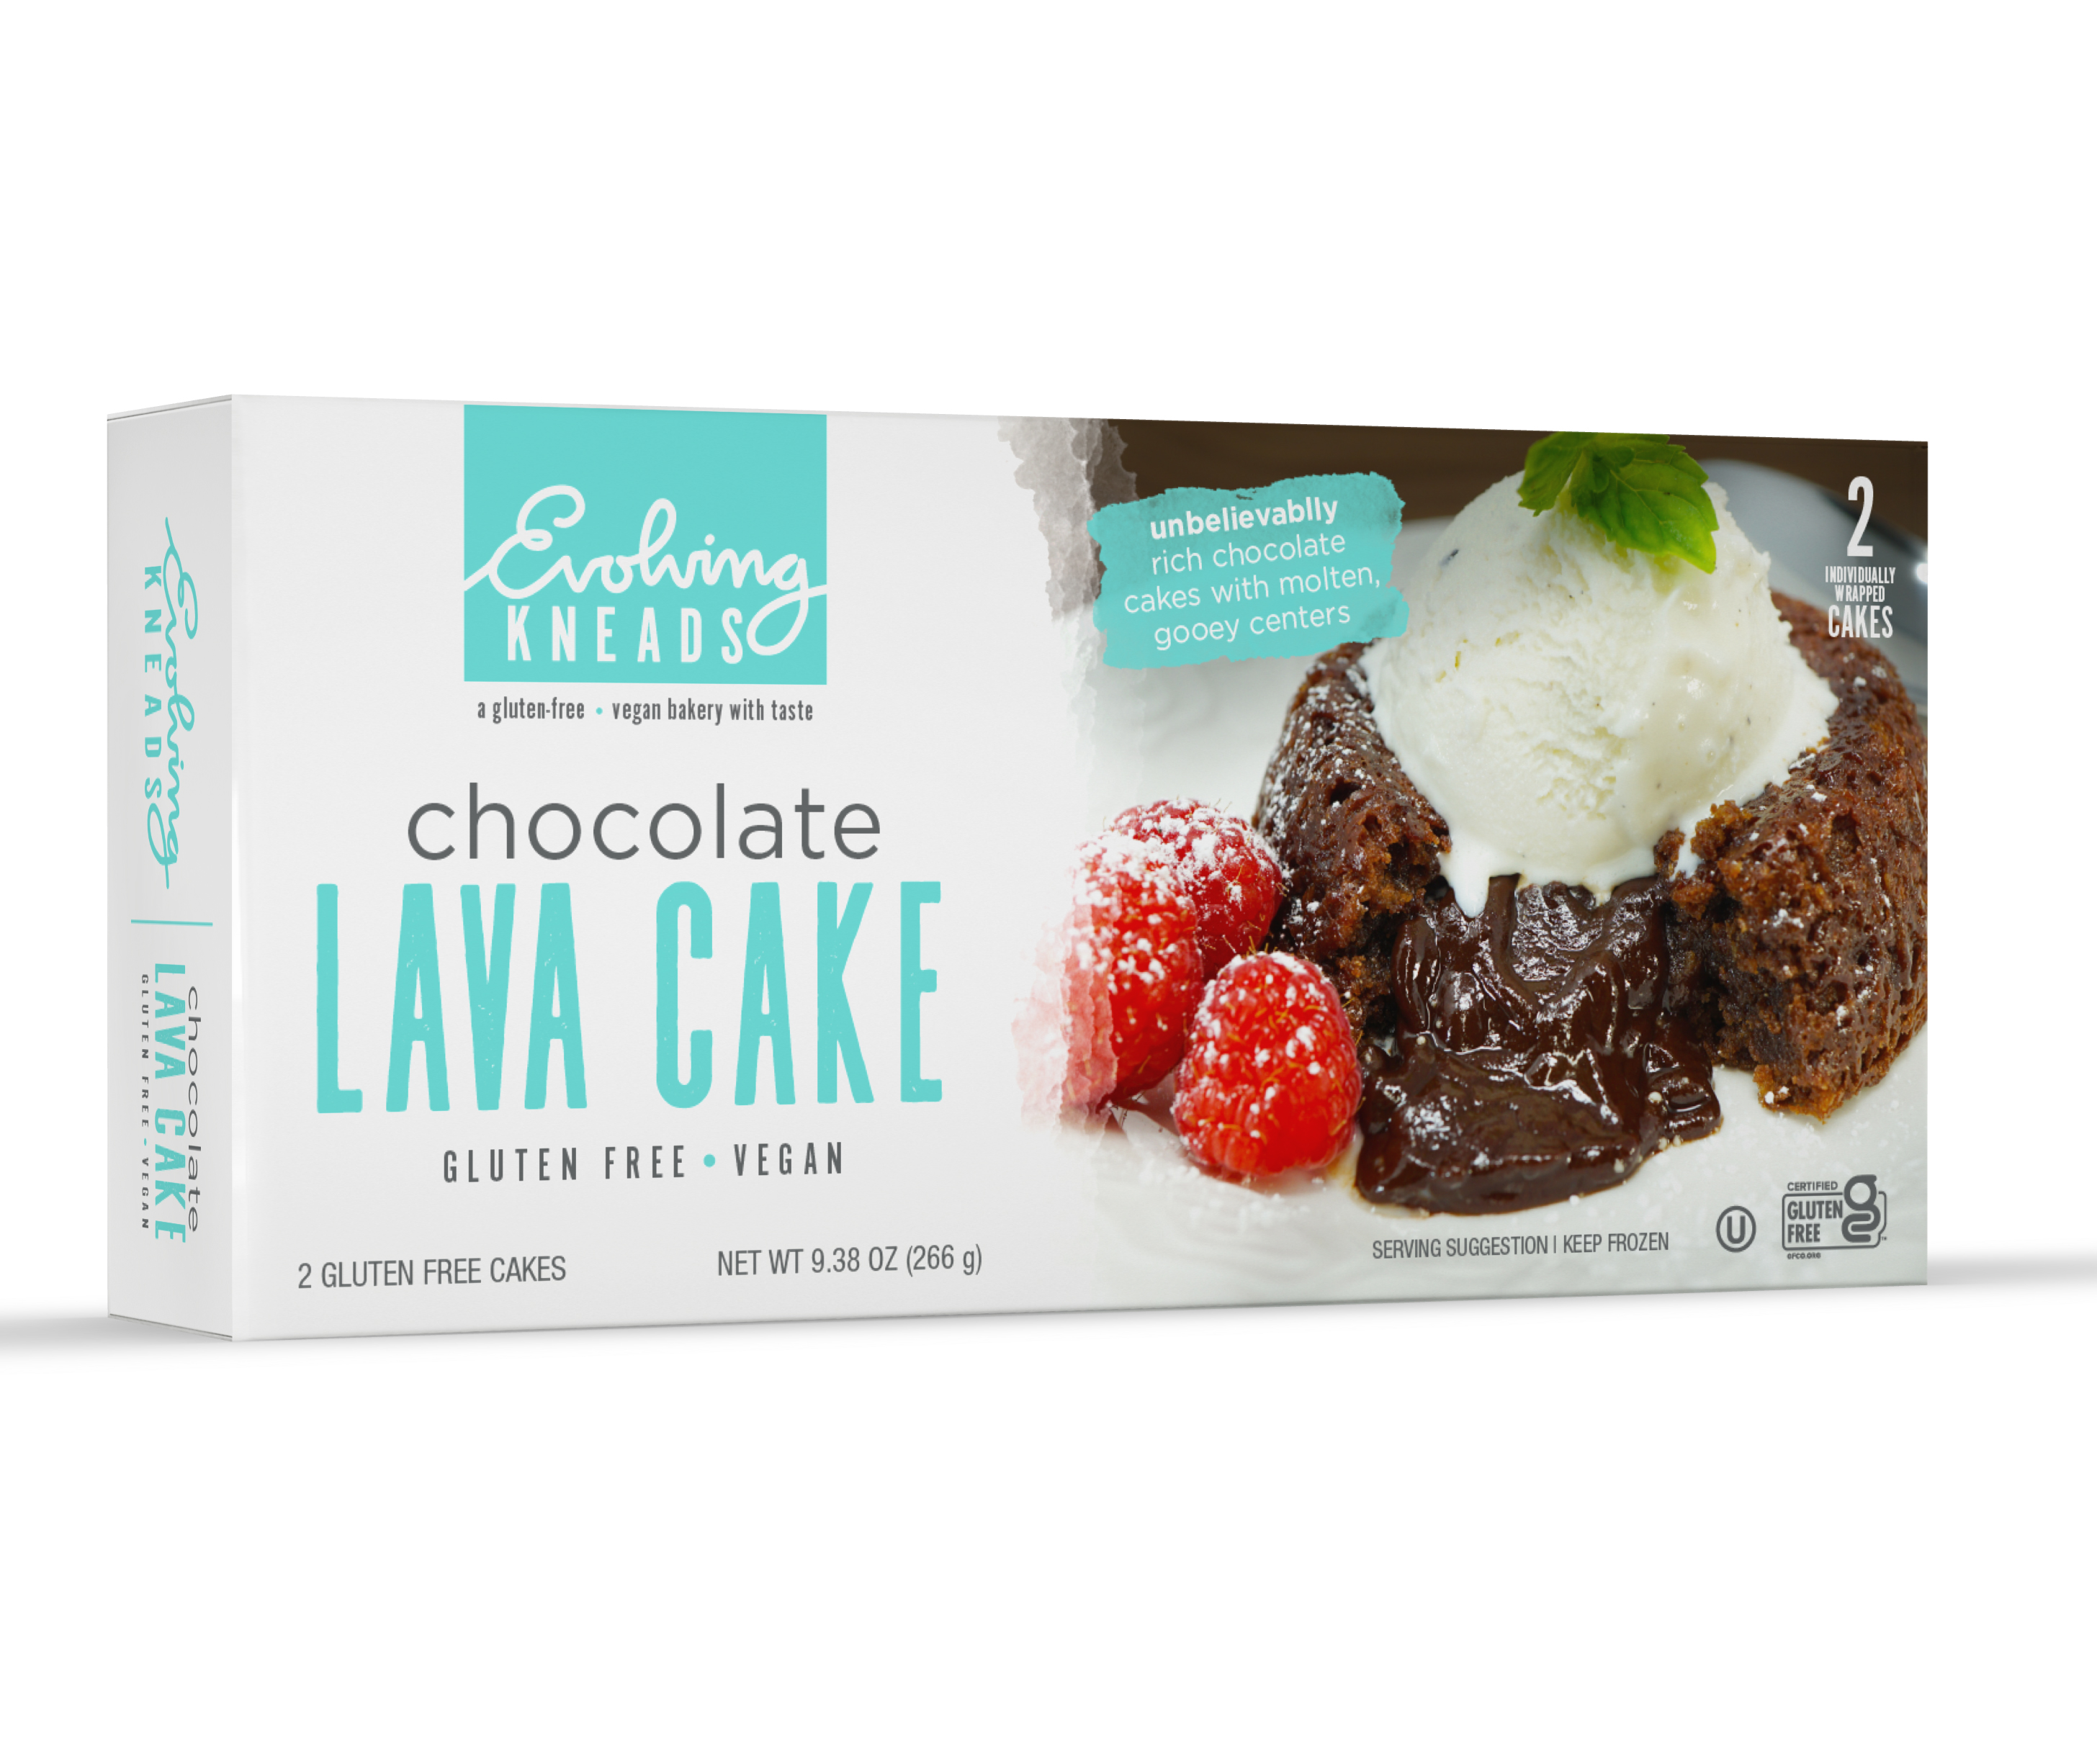 Evolving Kneads GFV Chocolate Lava Cake 6 units per case 9.4 oz